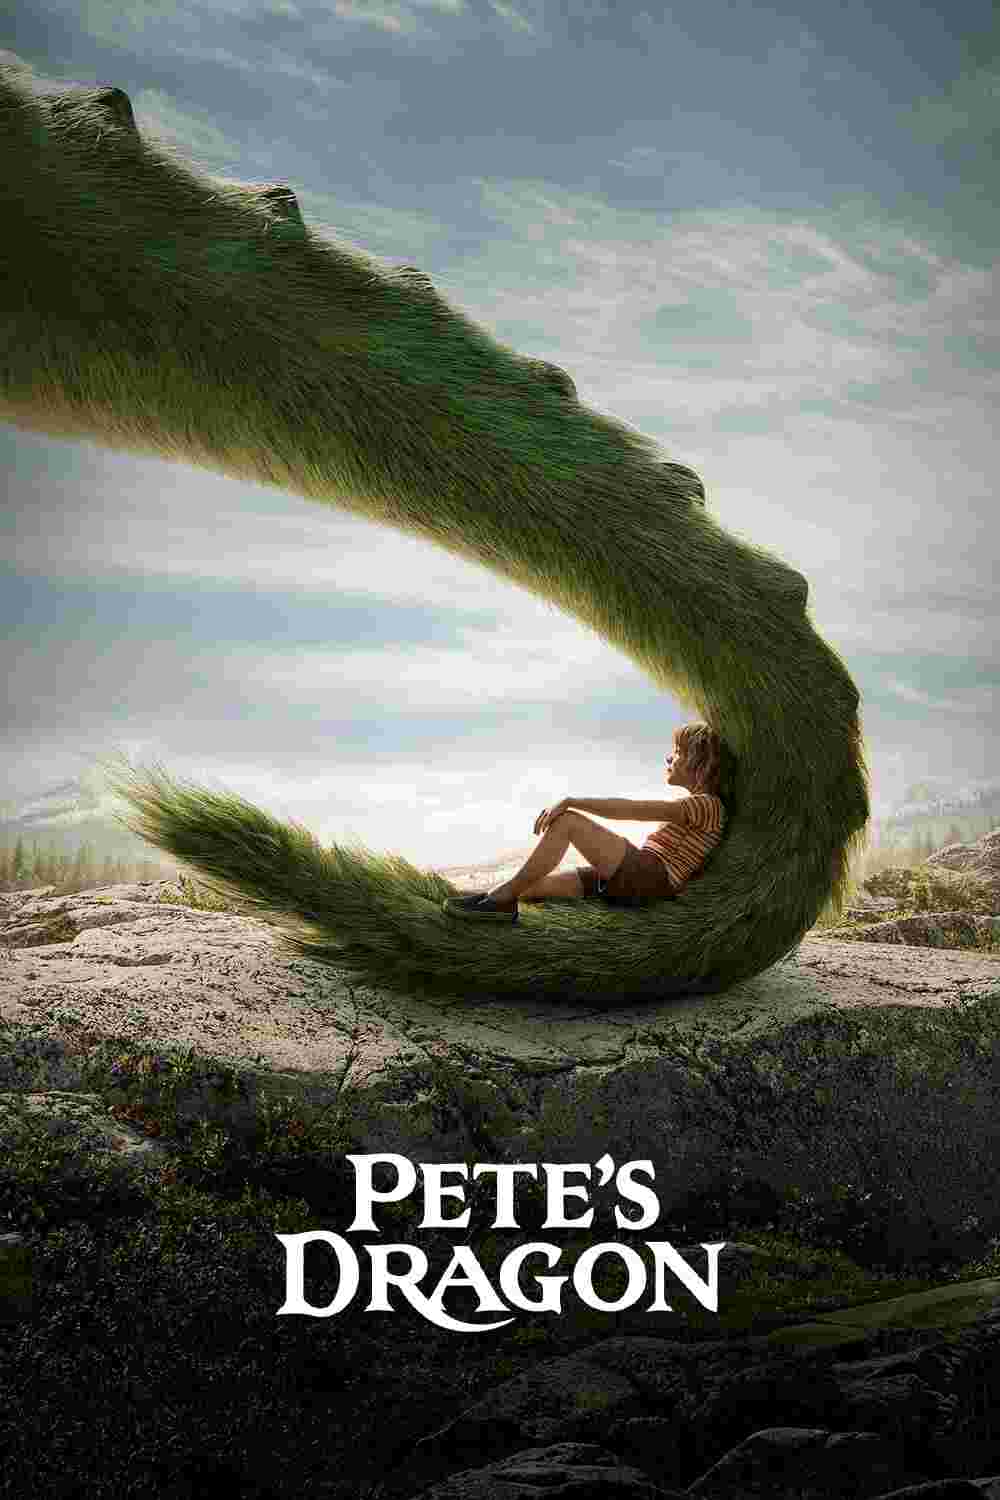 Pete's Dragon (2016) Bryce Dallas Howard